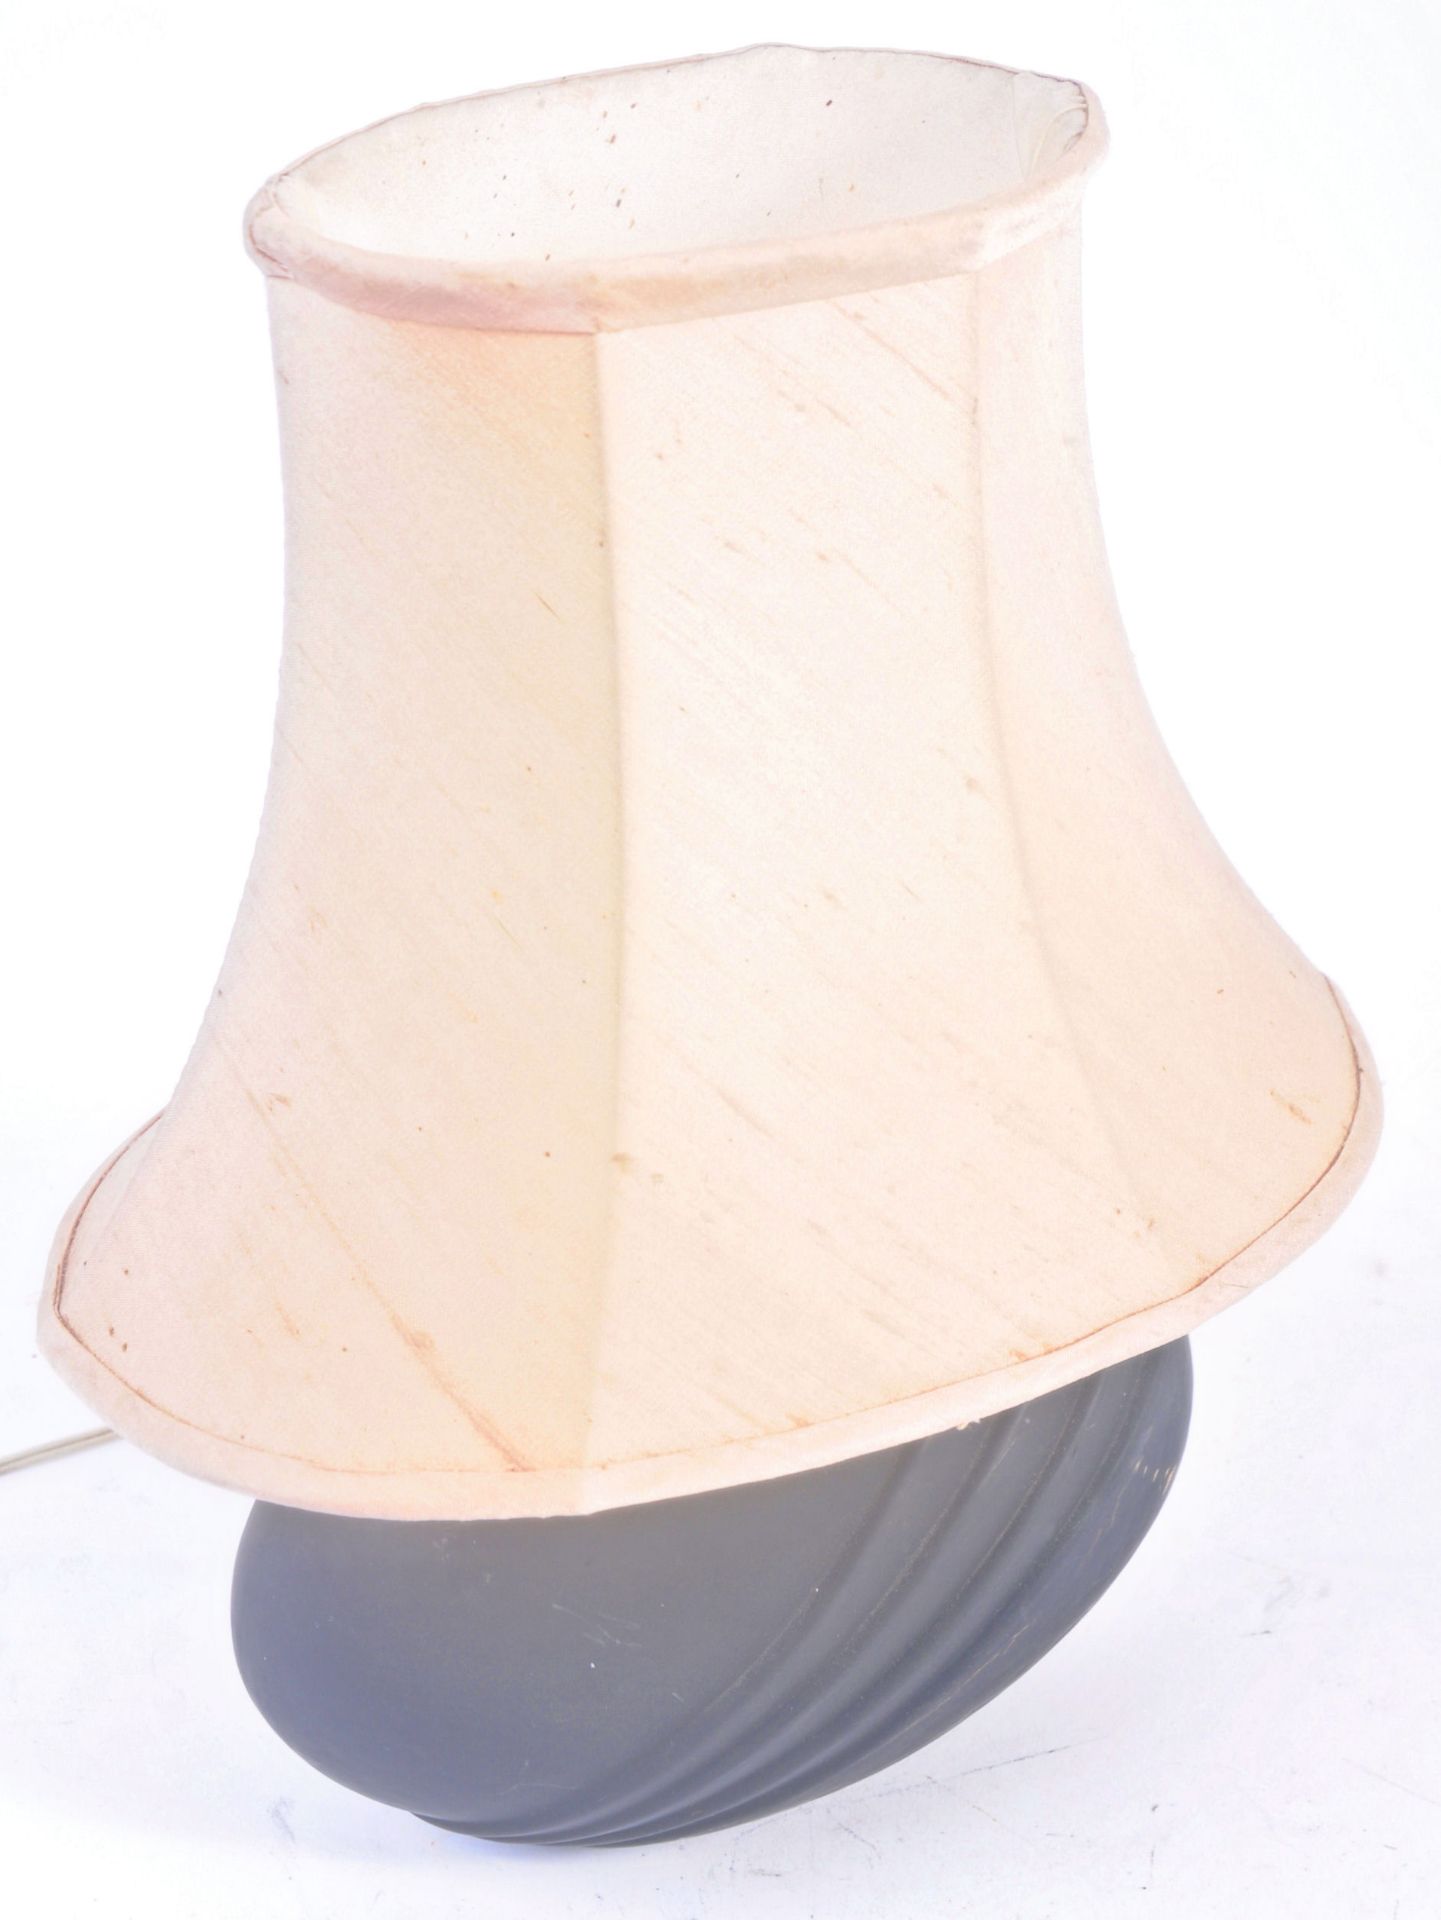 SONJA INGEGERD ANDERSSON FOR SIA - POTTERY TABLE LAMP LIGHT - Bild 3 aus 4